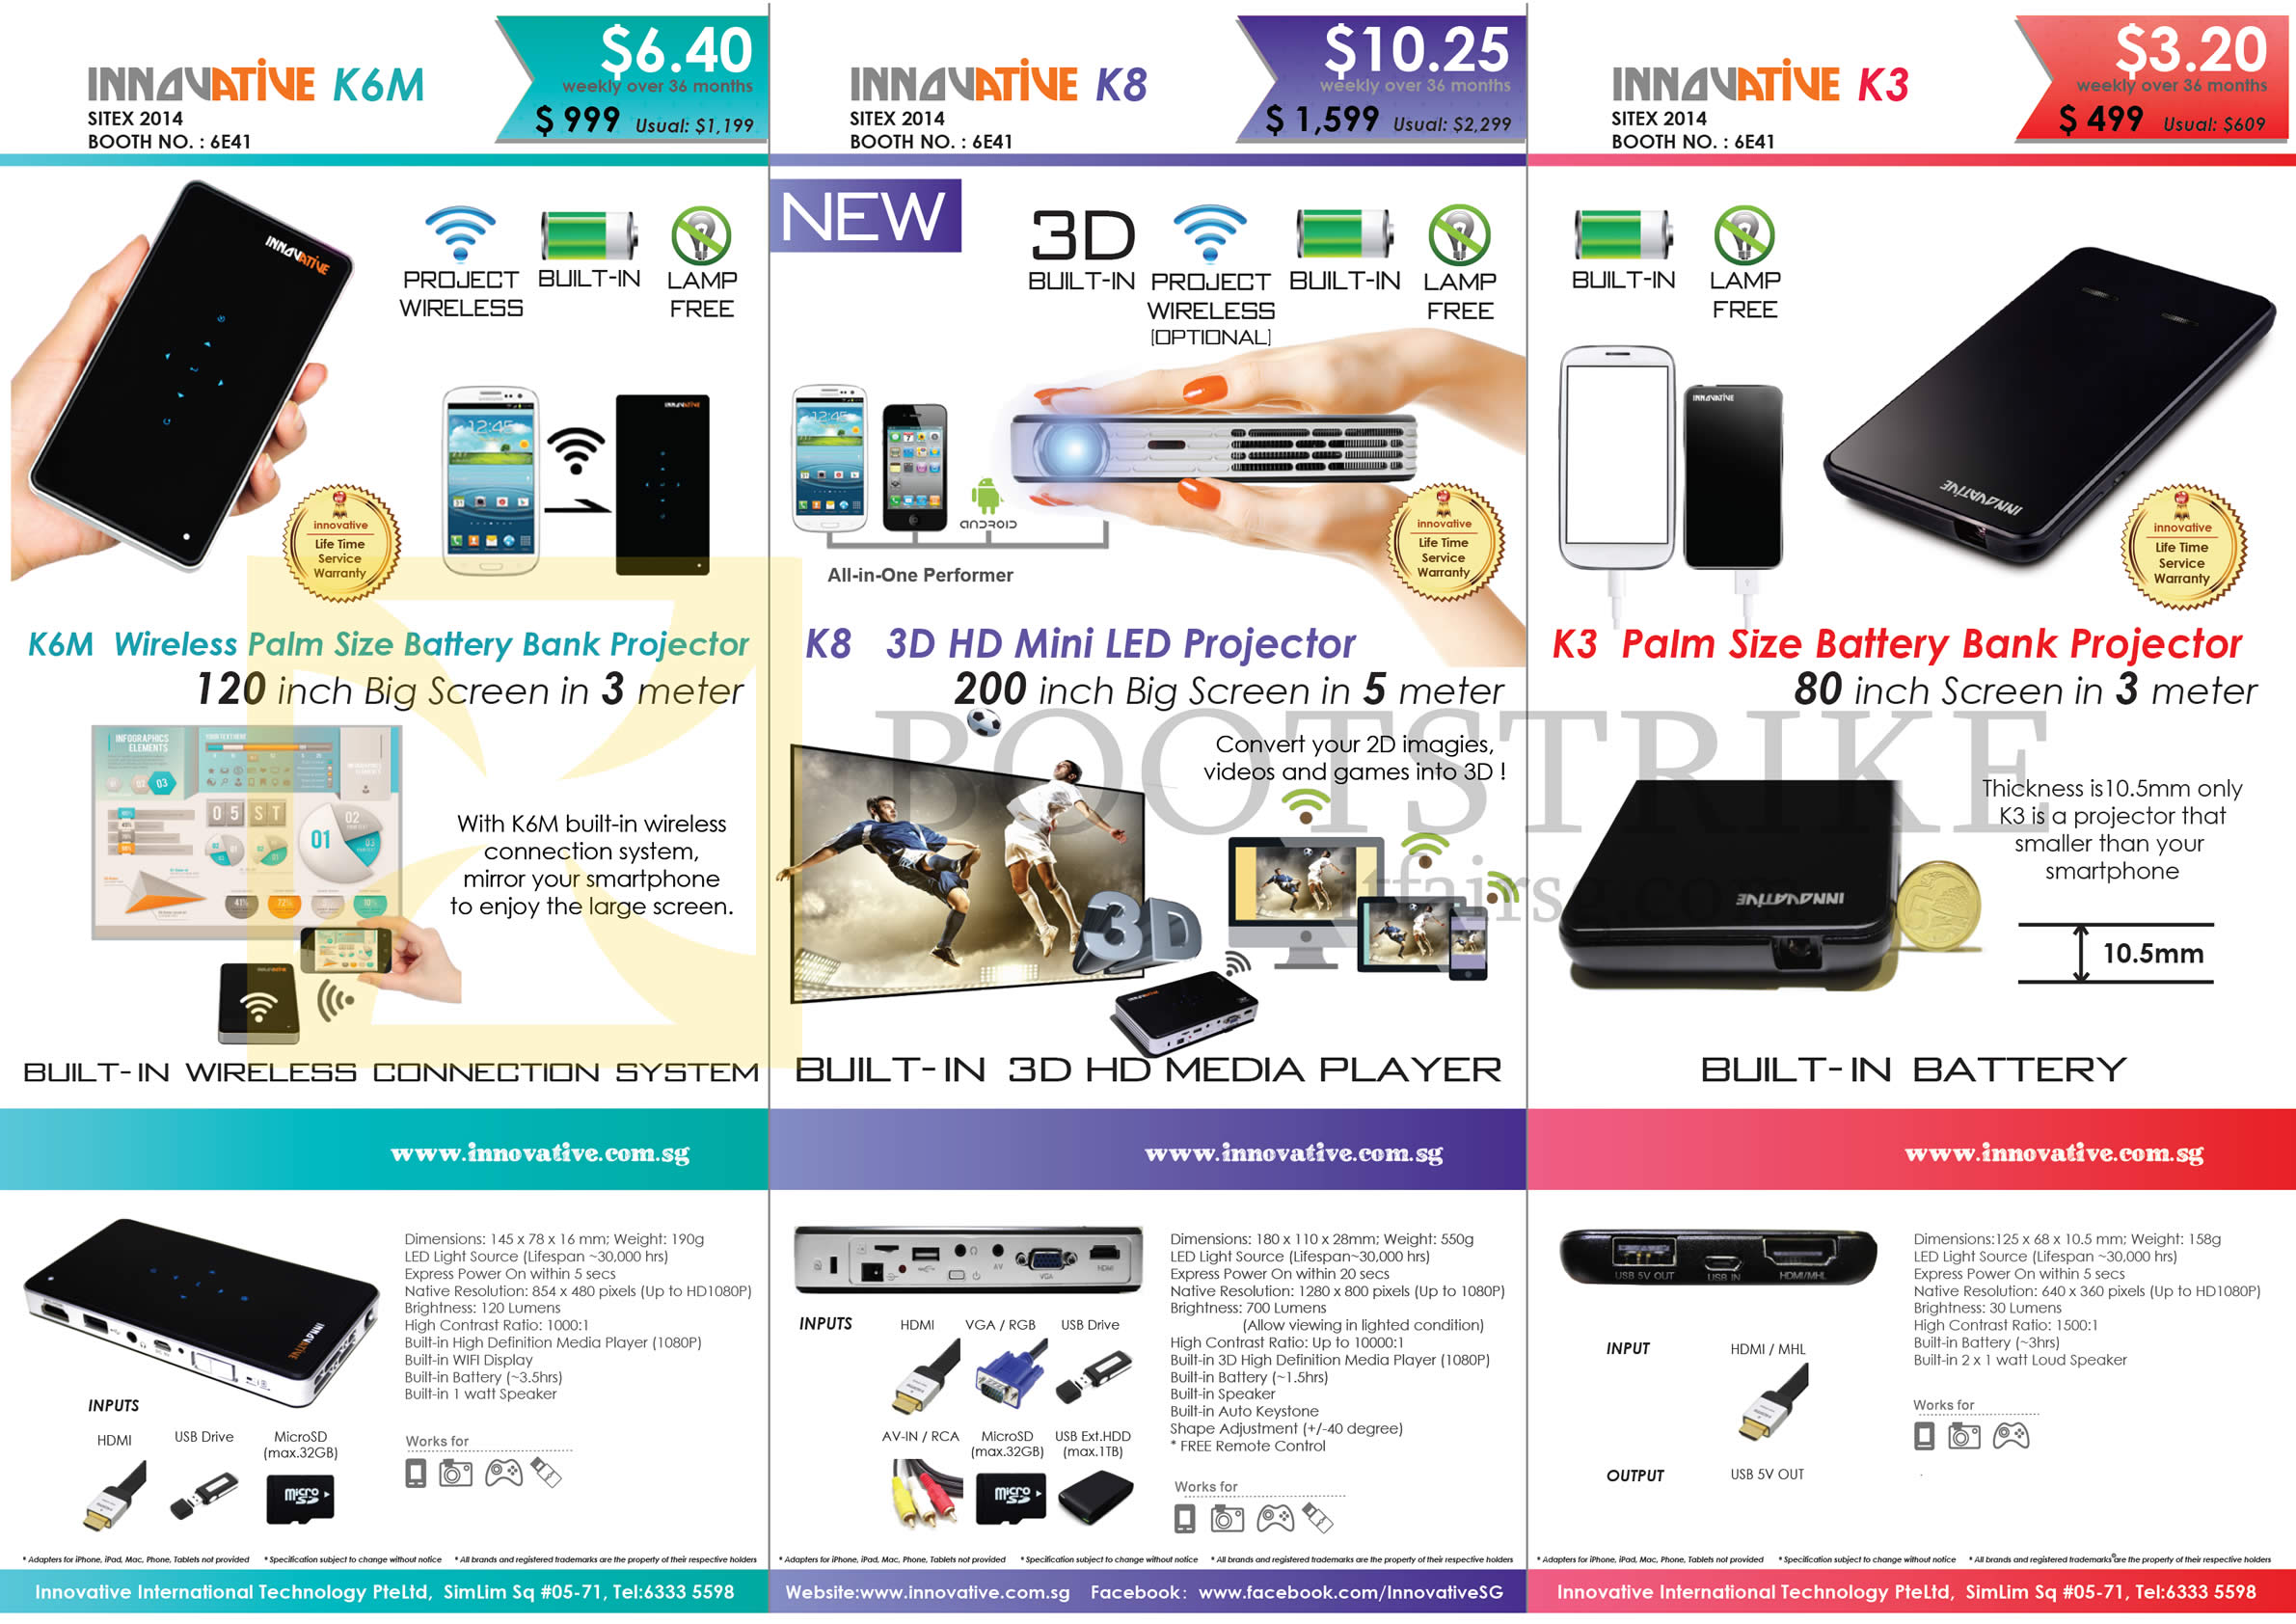 SITEX 2014 price list image brochure of Innovative K6M, K8, K3 Battery Bank Projector